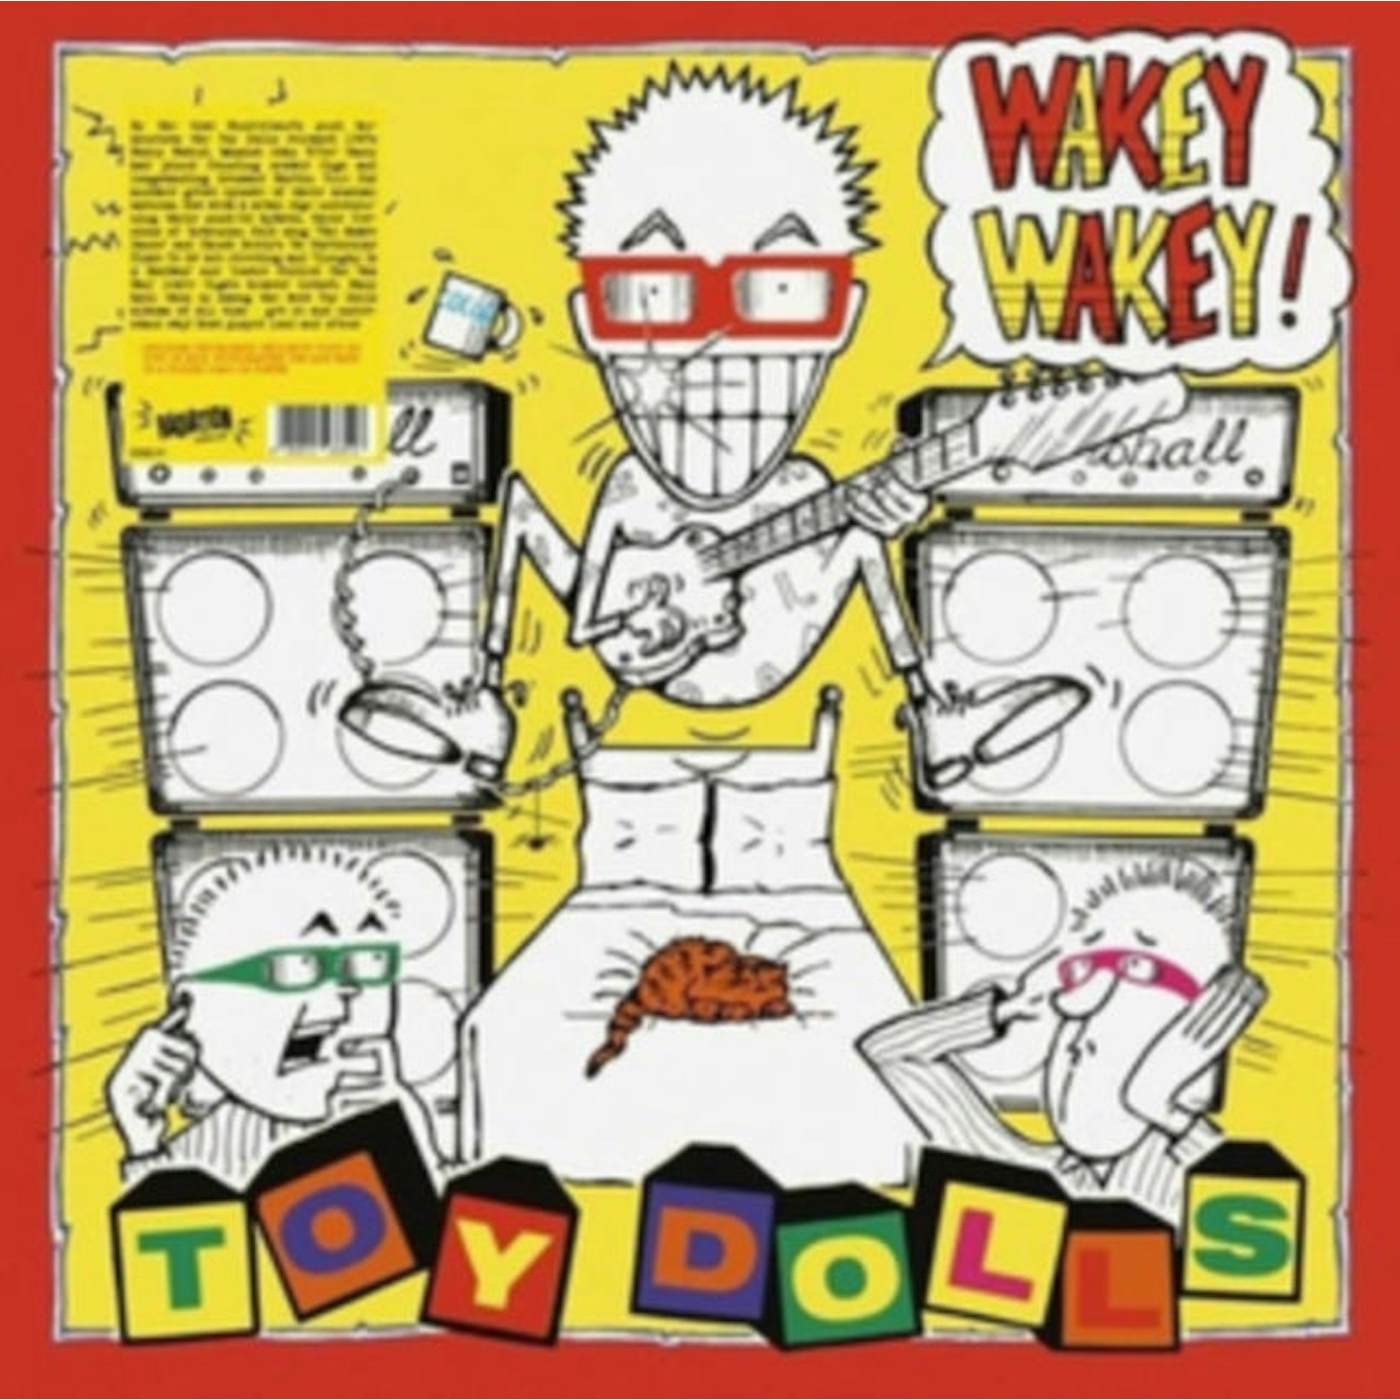 The Toy Dolls LP Vinyl Record - Wakey Wakey!